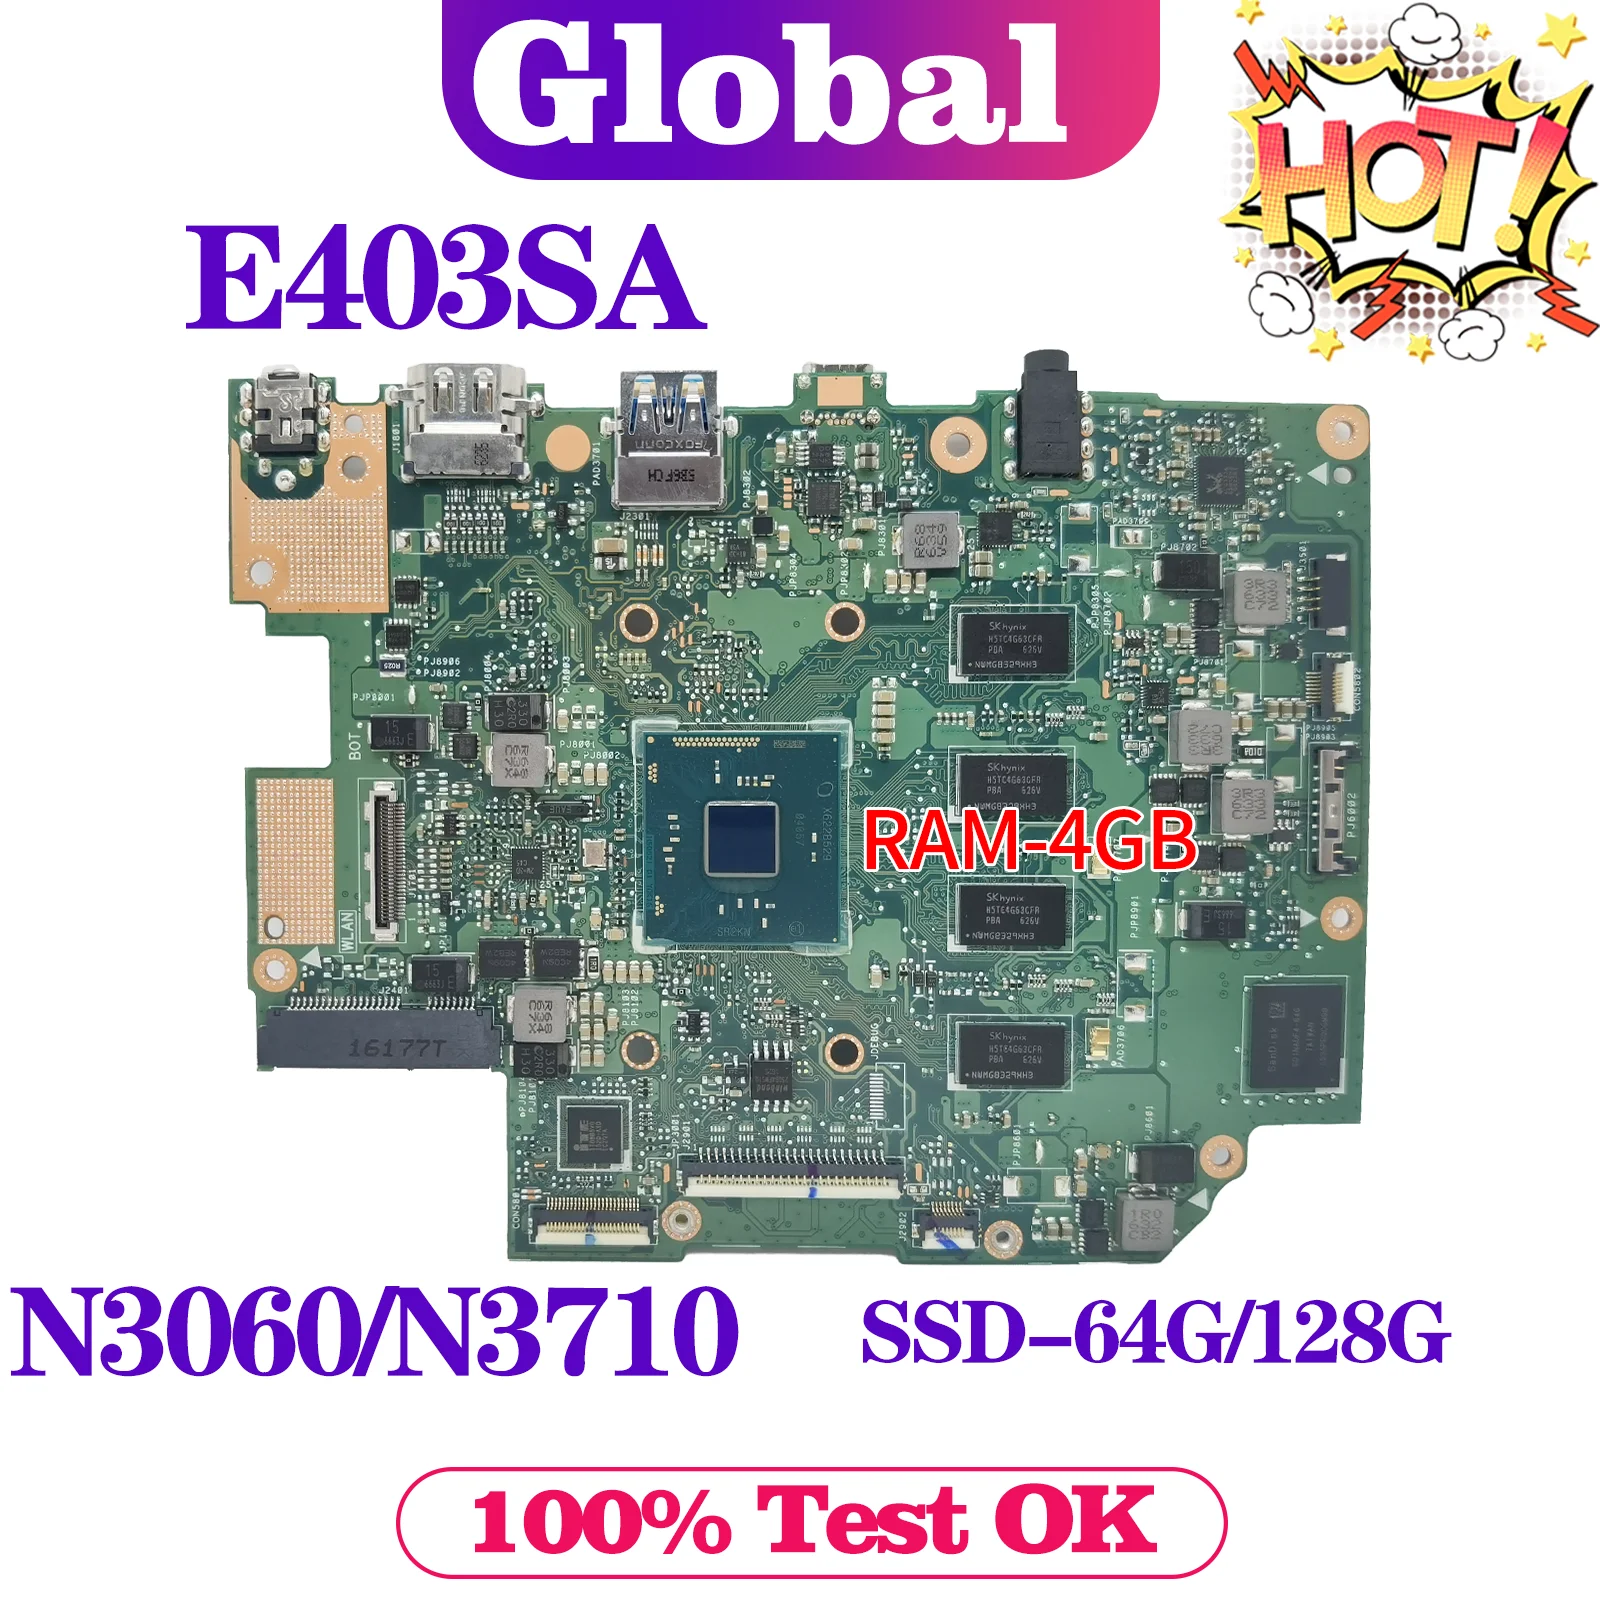 

KEFU E403S Mainboard For ASUS E403SA Laptop Motherboard N3050/N3060 N3700/N3710 SSD-64G/128G 4GB/RAM MAIN BOARD TEST OK